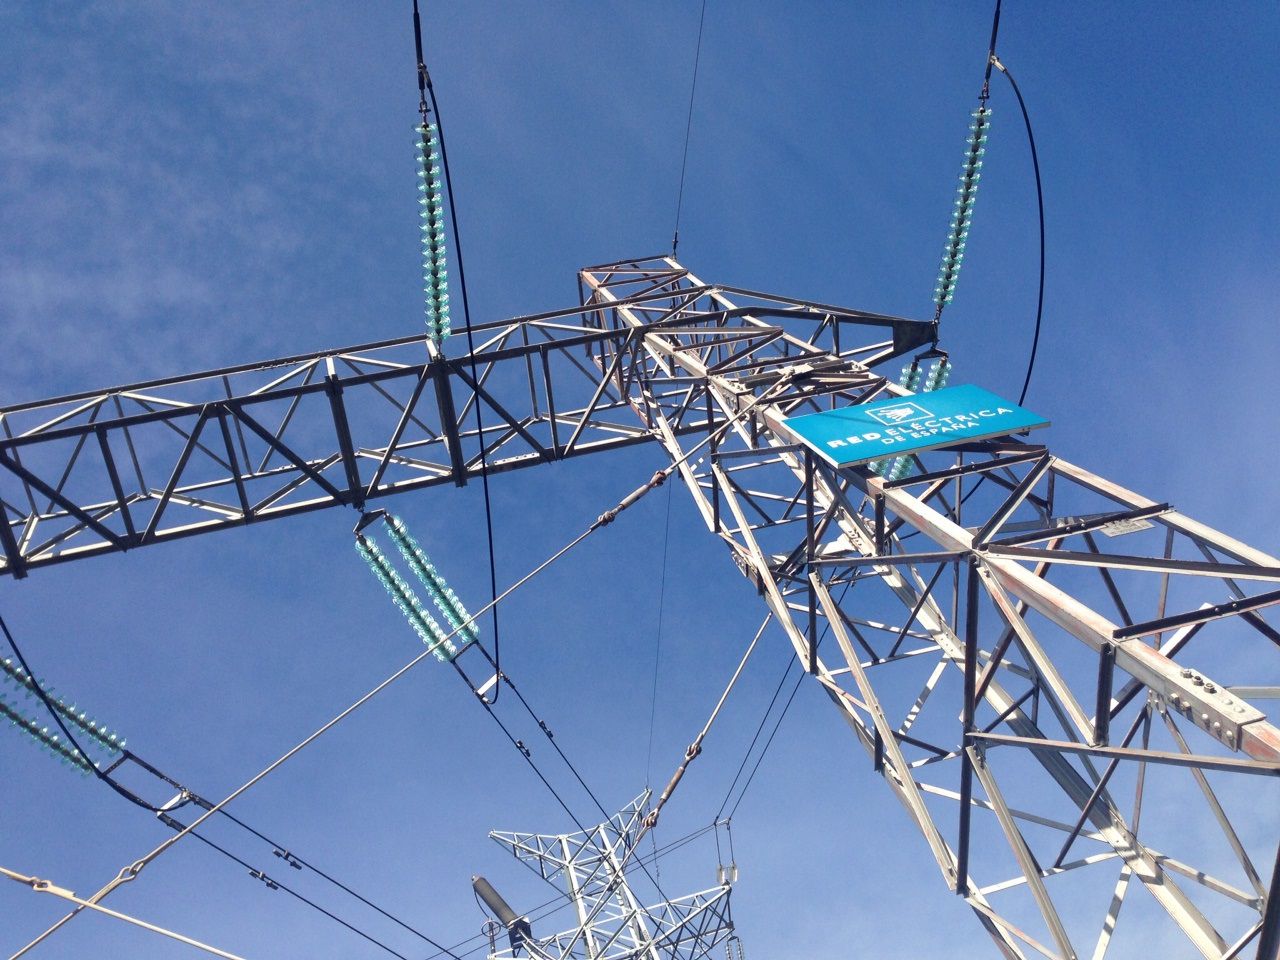 01-07-2014 Power lines, light EUROPE SPAIN ECONOMY
